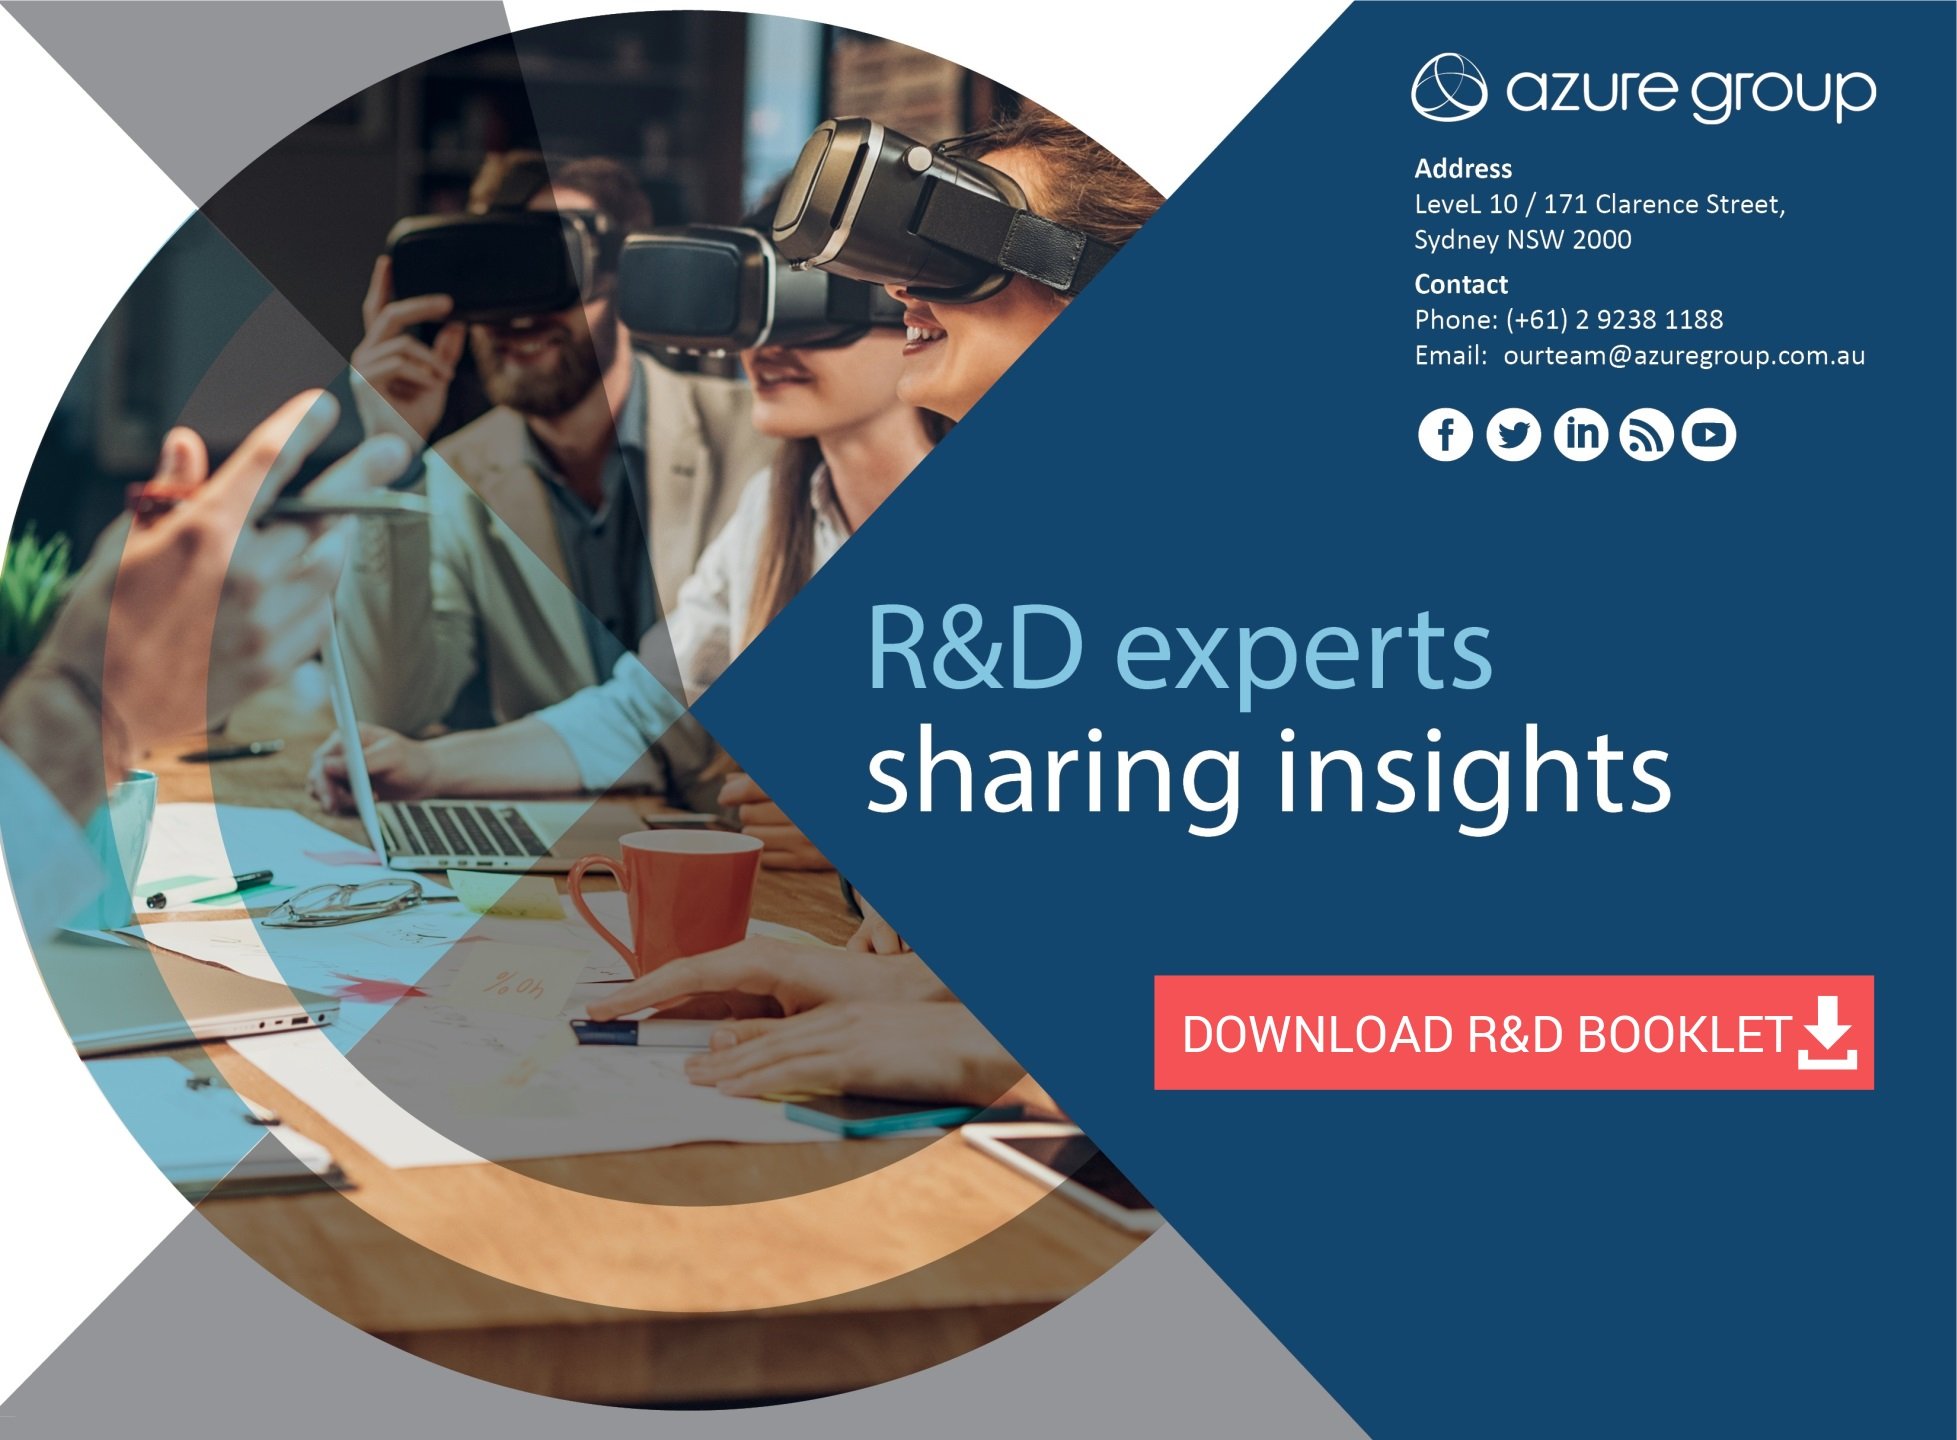 Download R&D booklet - Azure Group R&D Experts-1